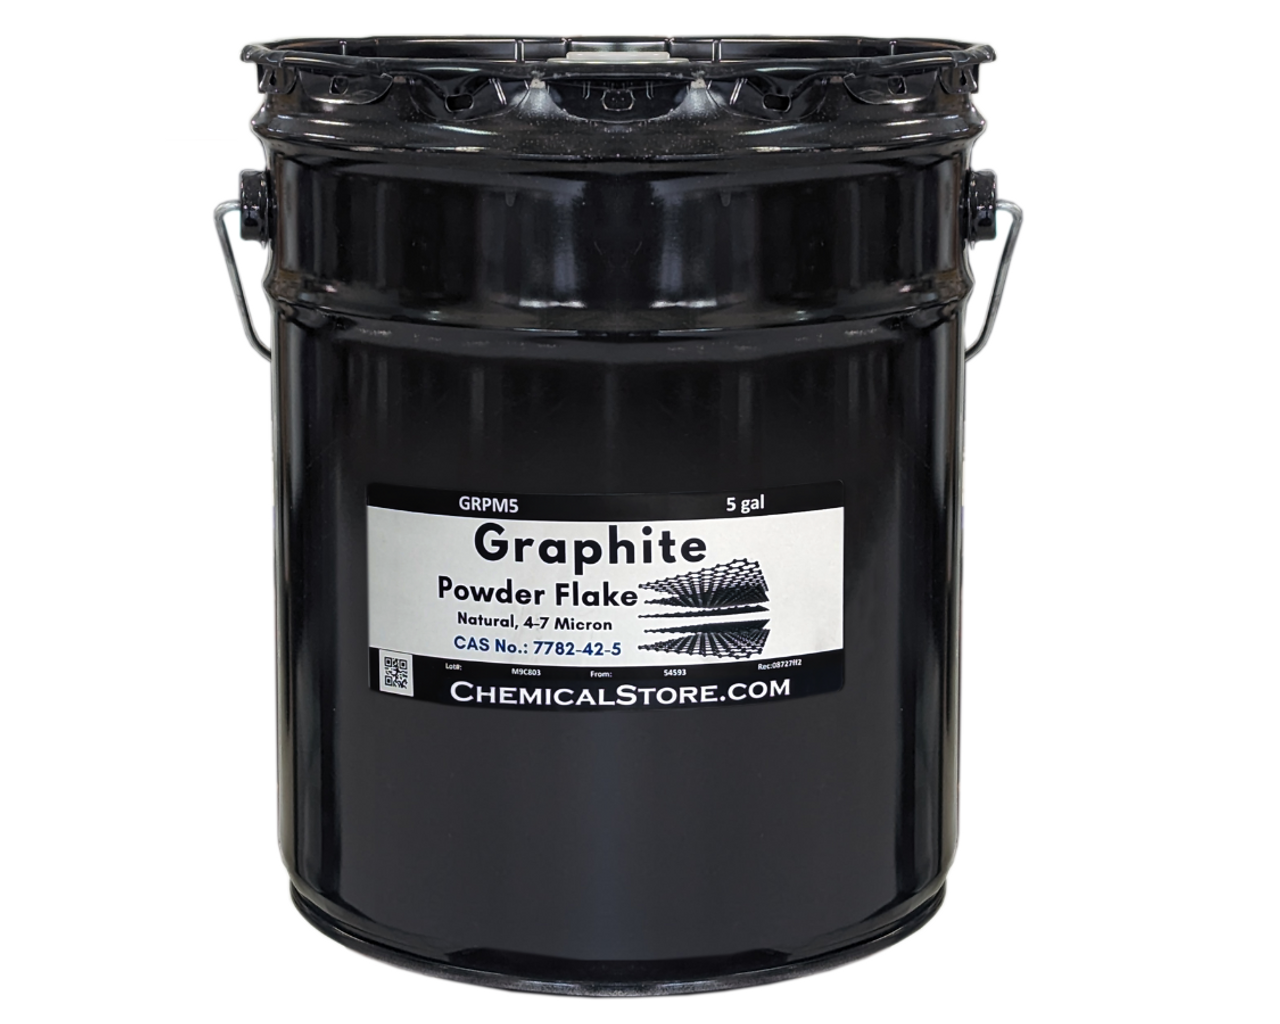 Graphite Powder, Natural, Flake, 5 gallons (GRPM5-5GAL)